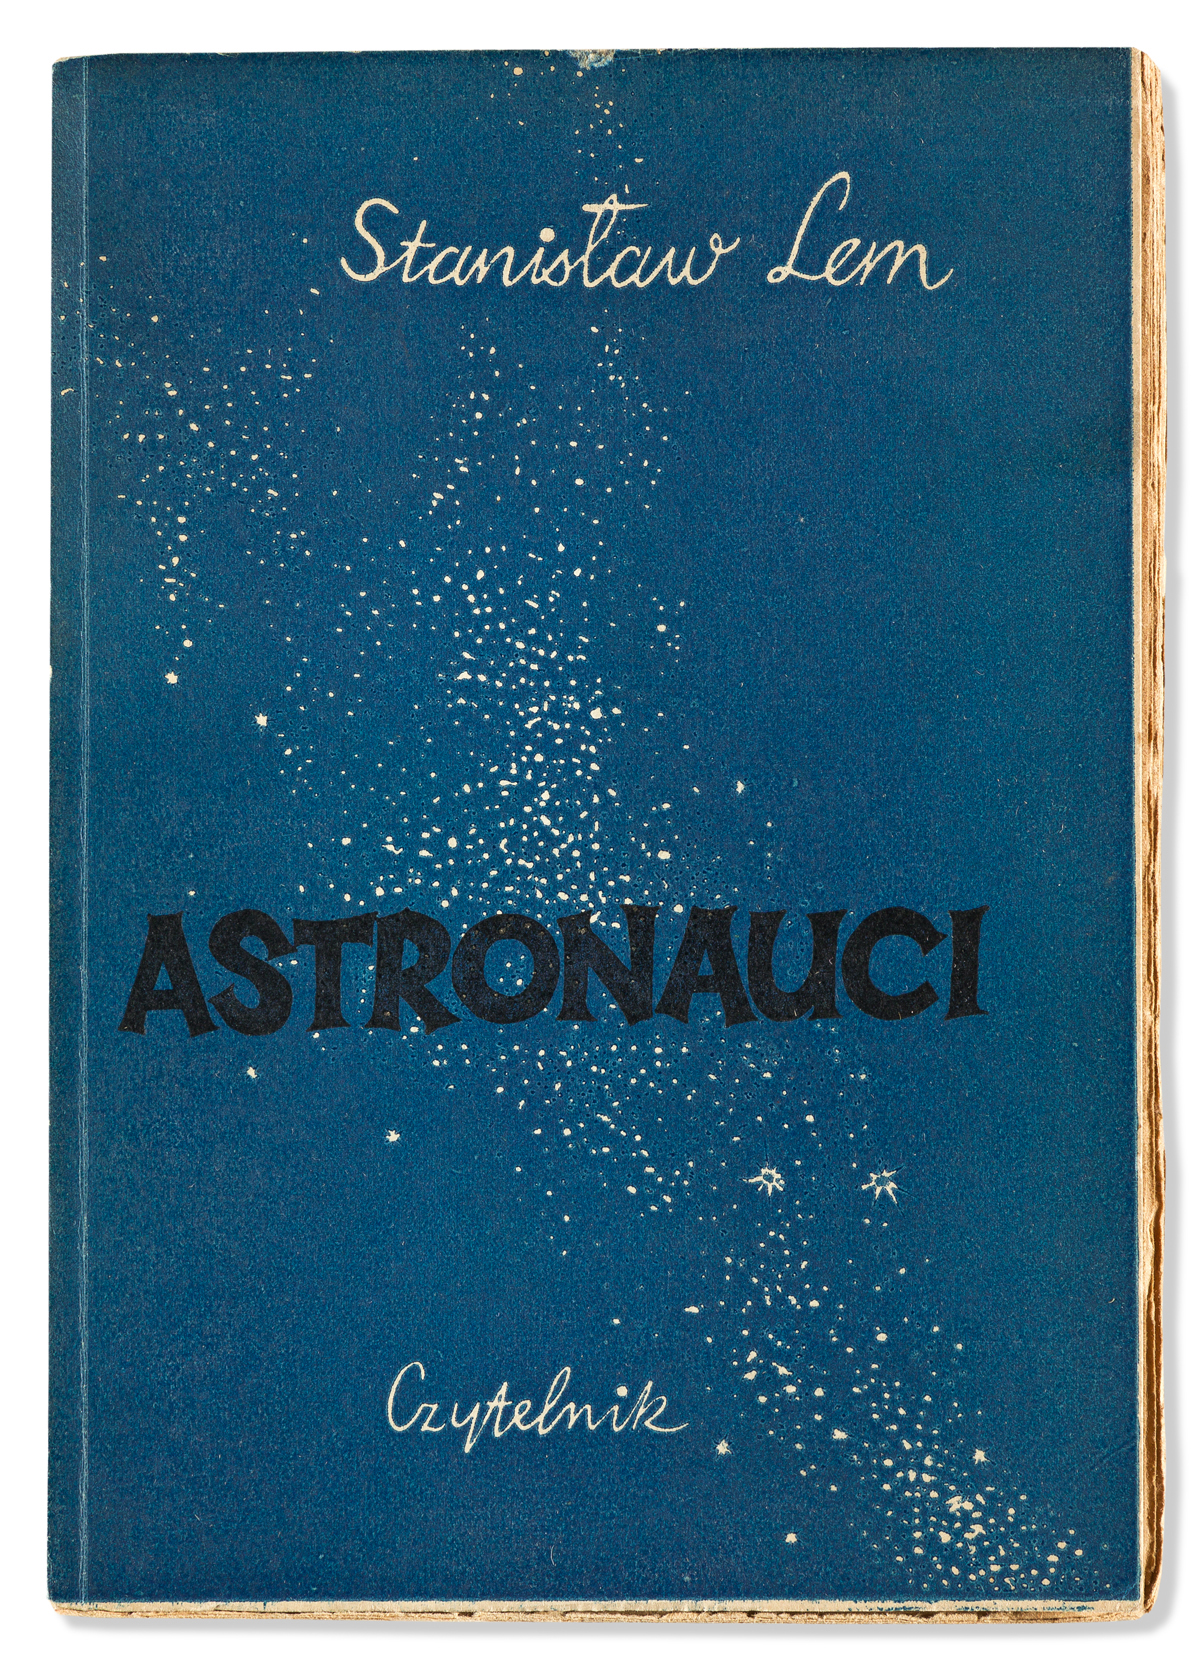 LEM, STANISLAW. Astronauci.